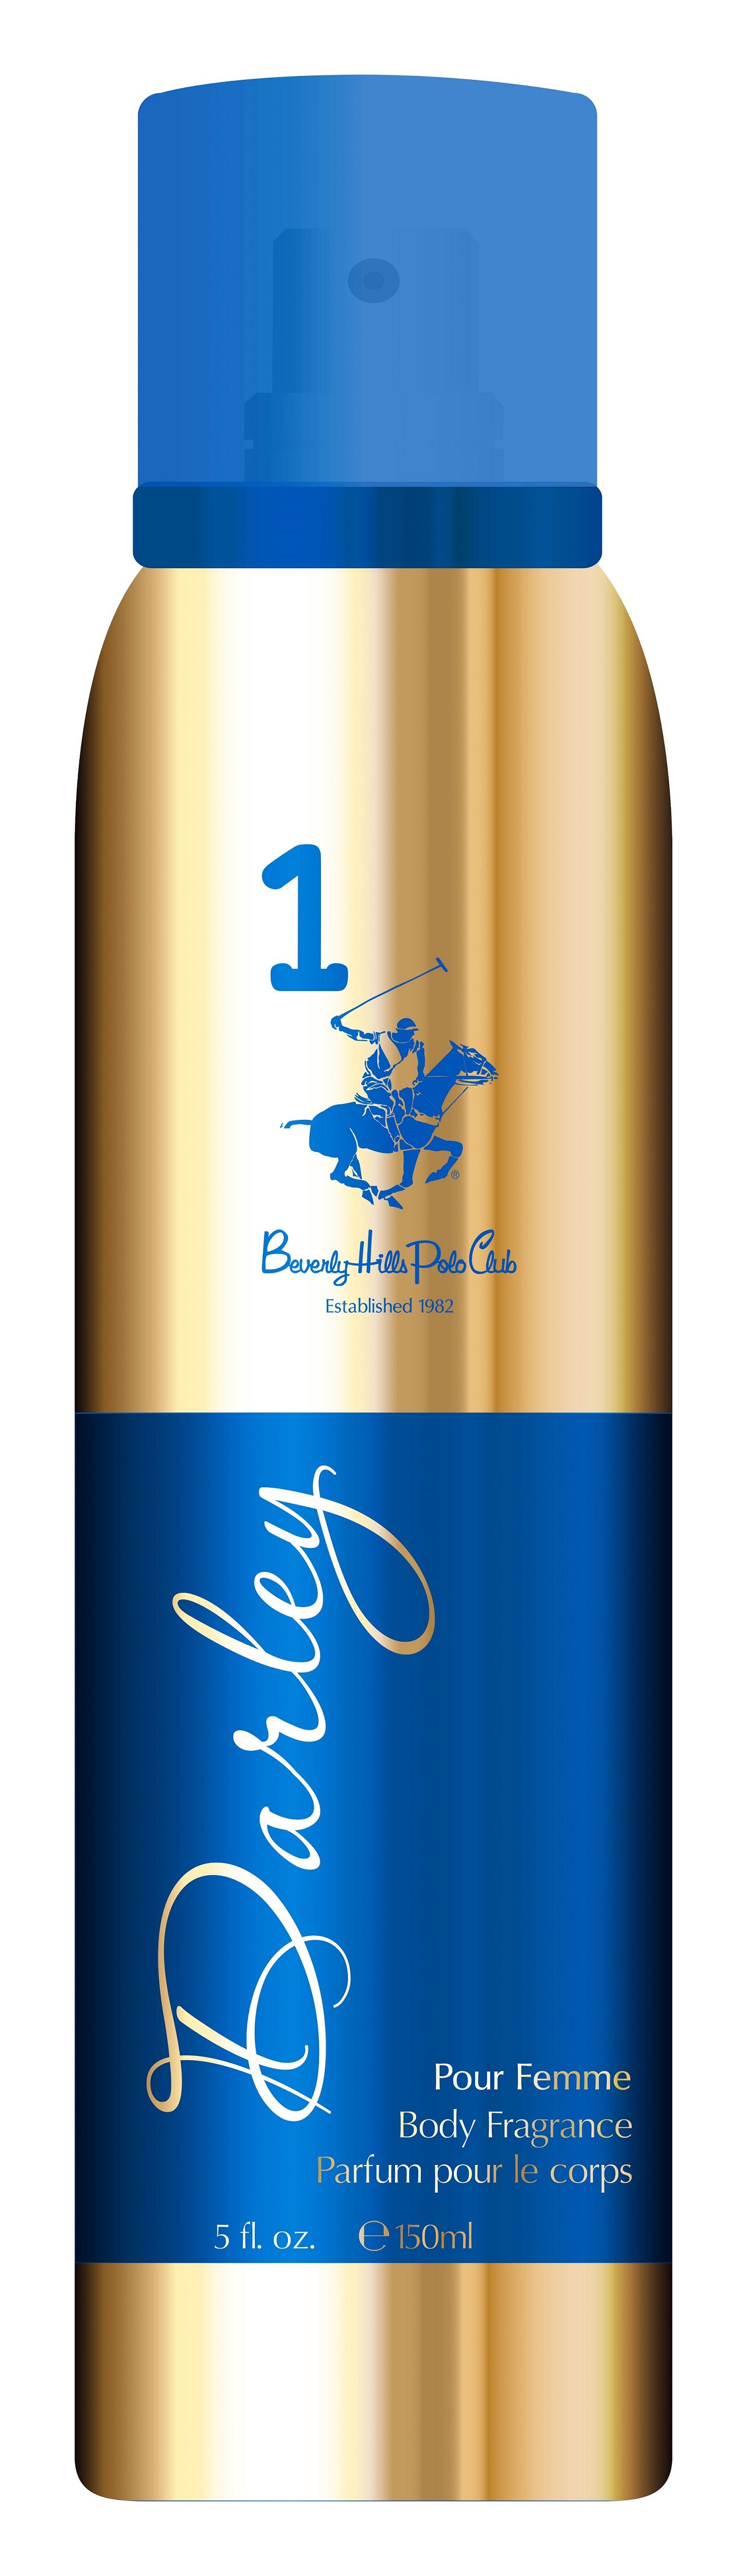 Beverly Hills Polo Club 1 Darley Gold Body Fragrance For Women